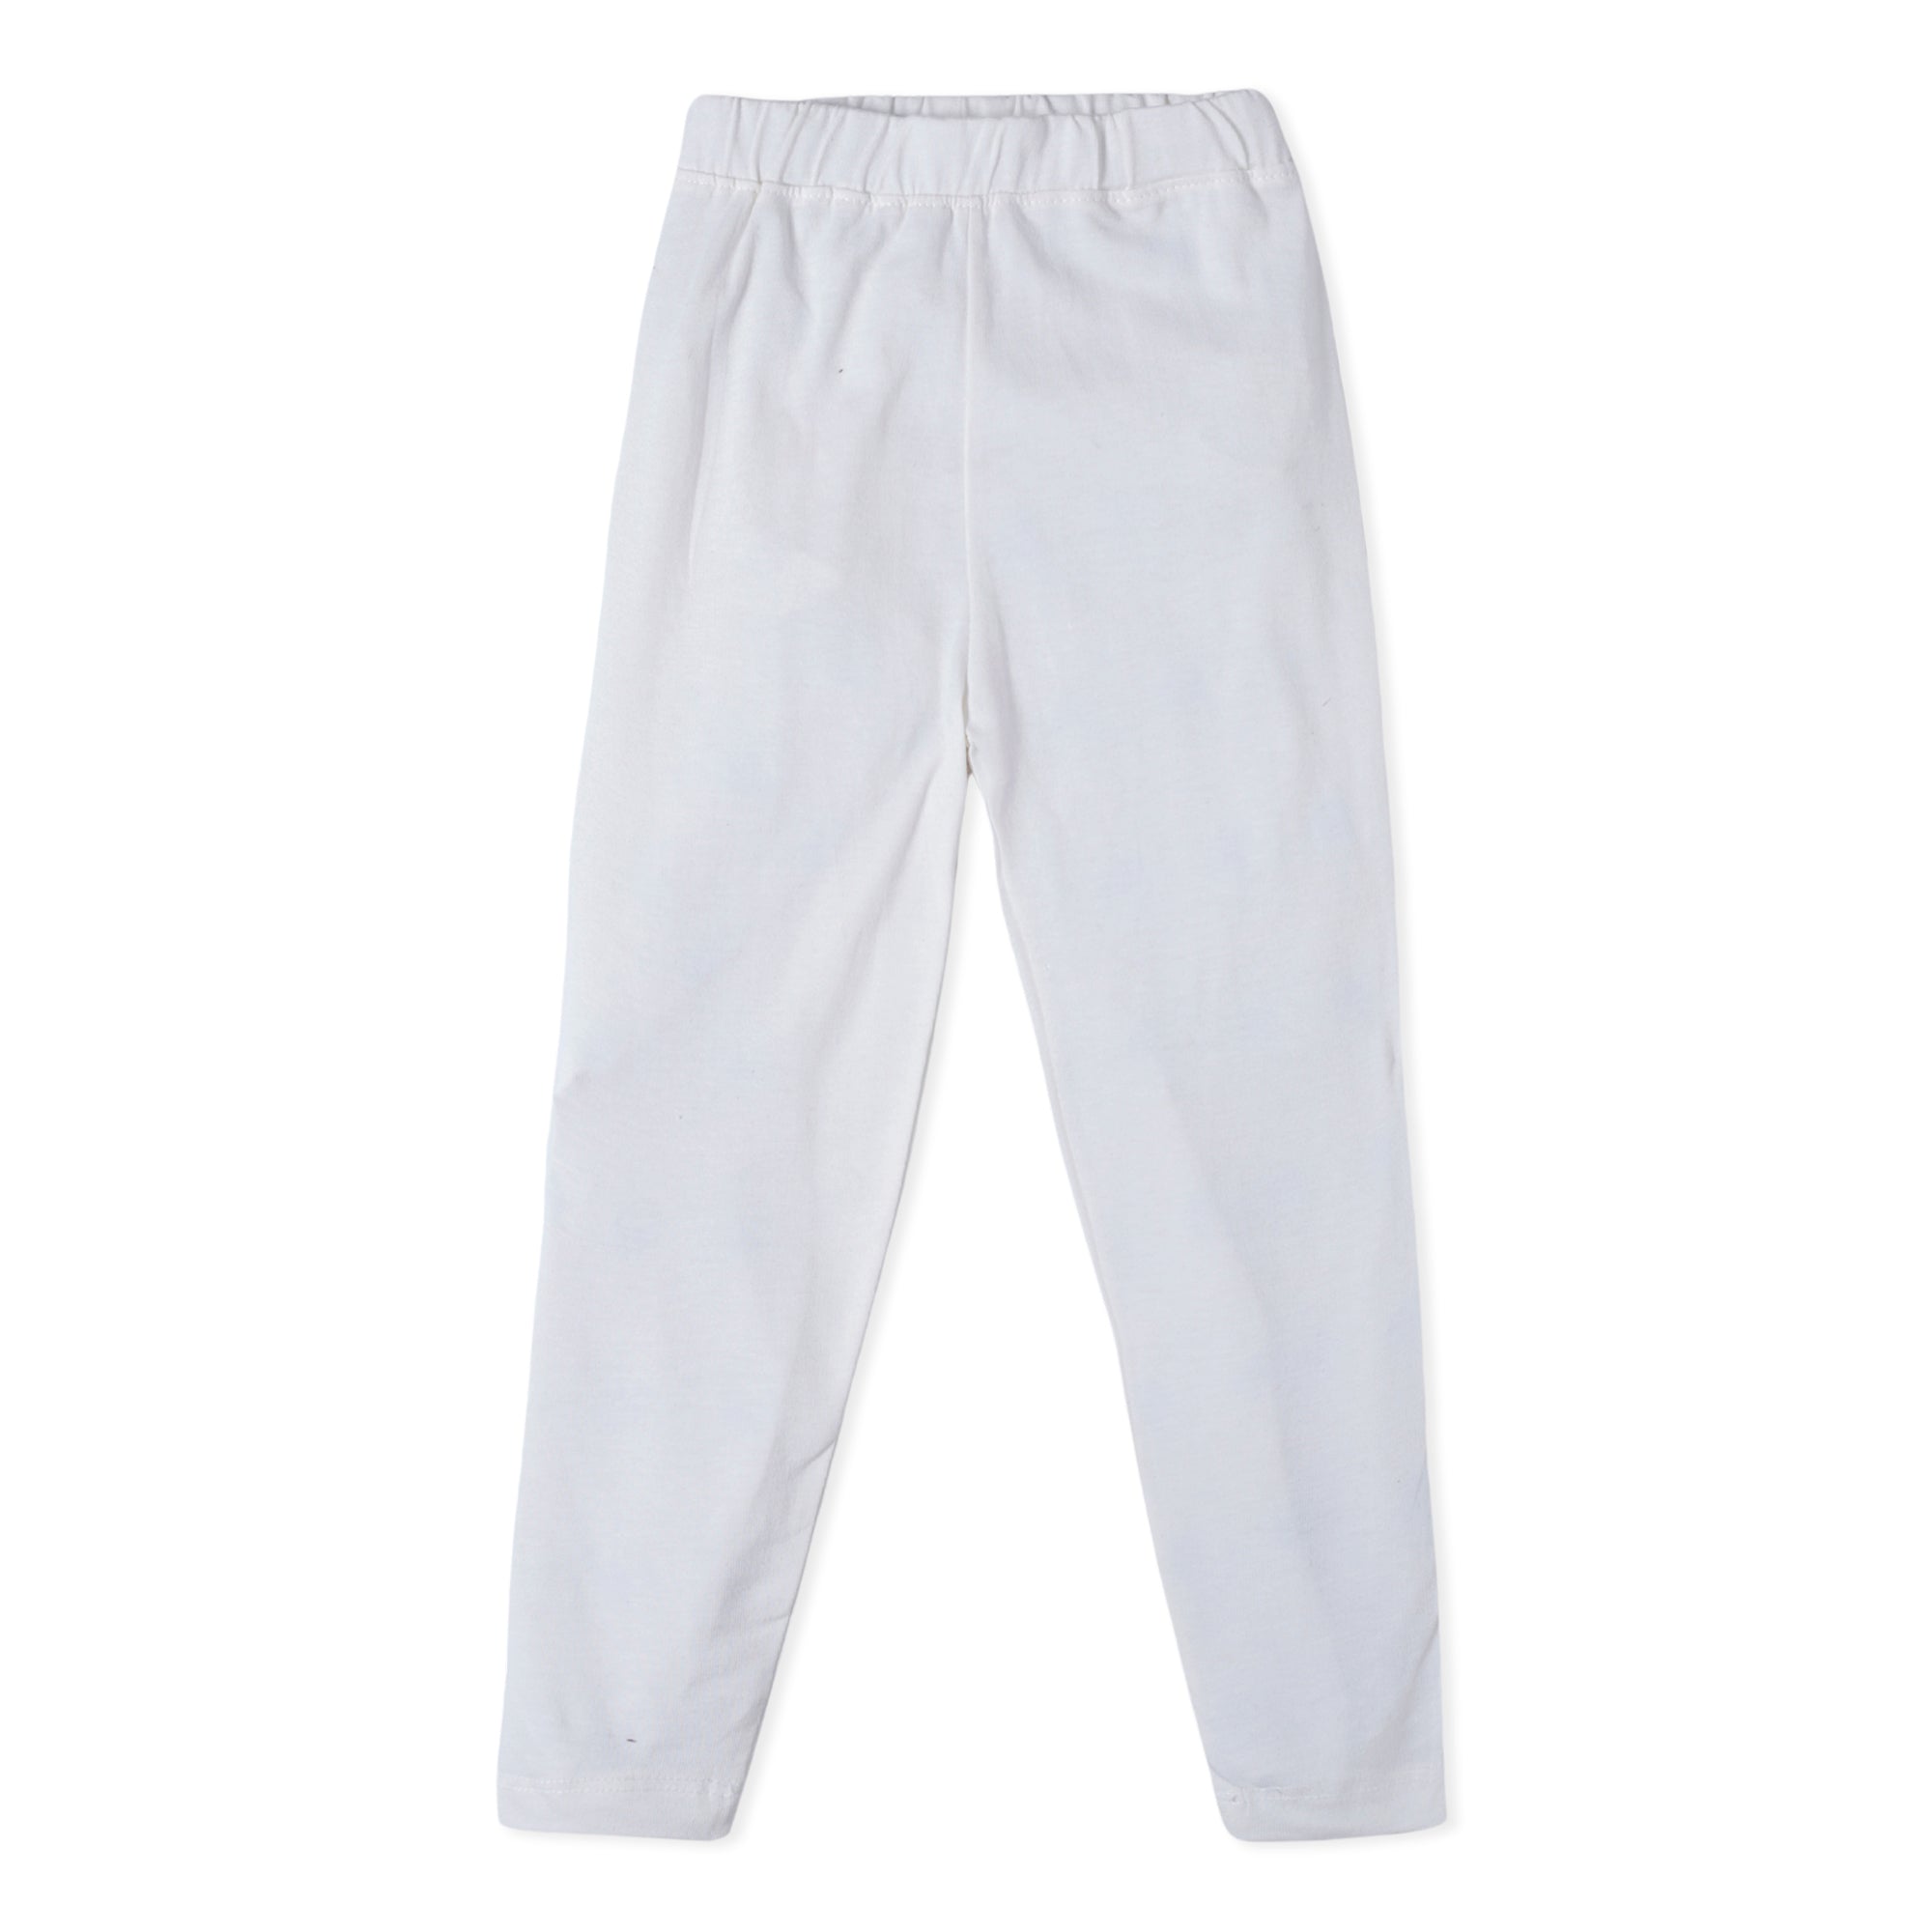 Classic White Cotton Pants